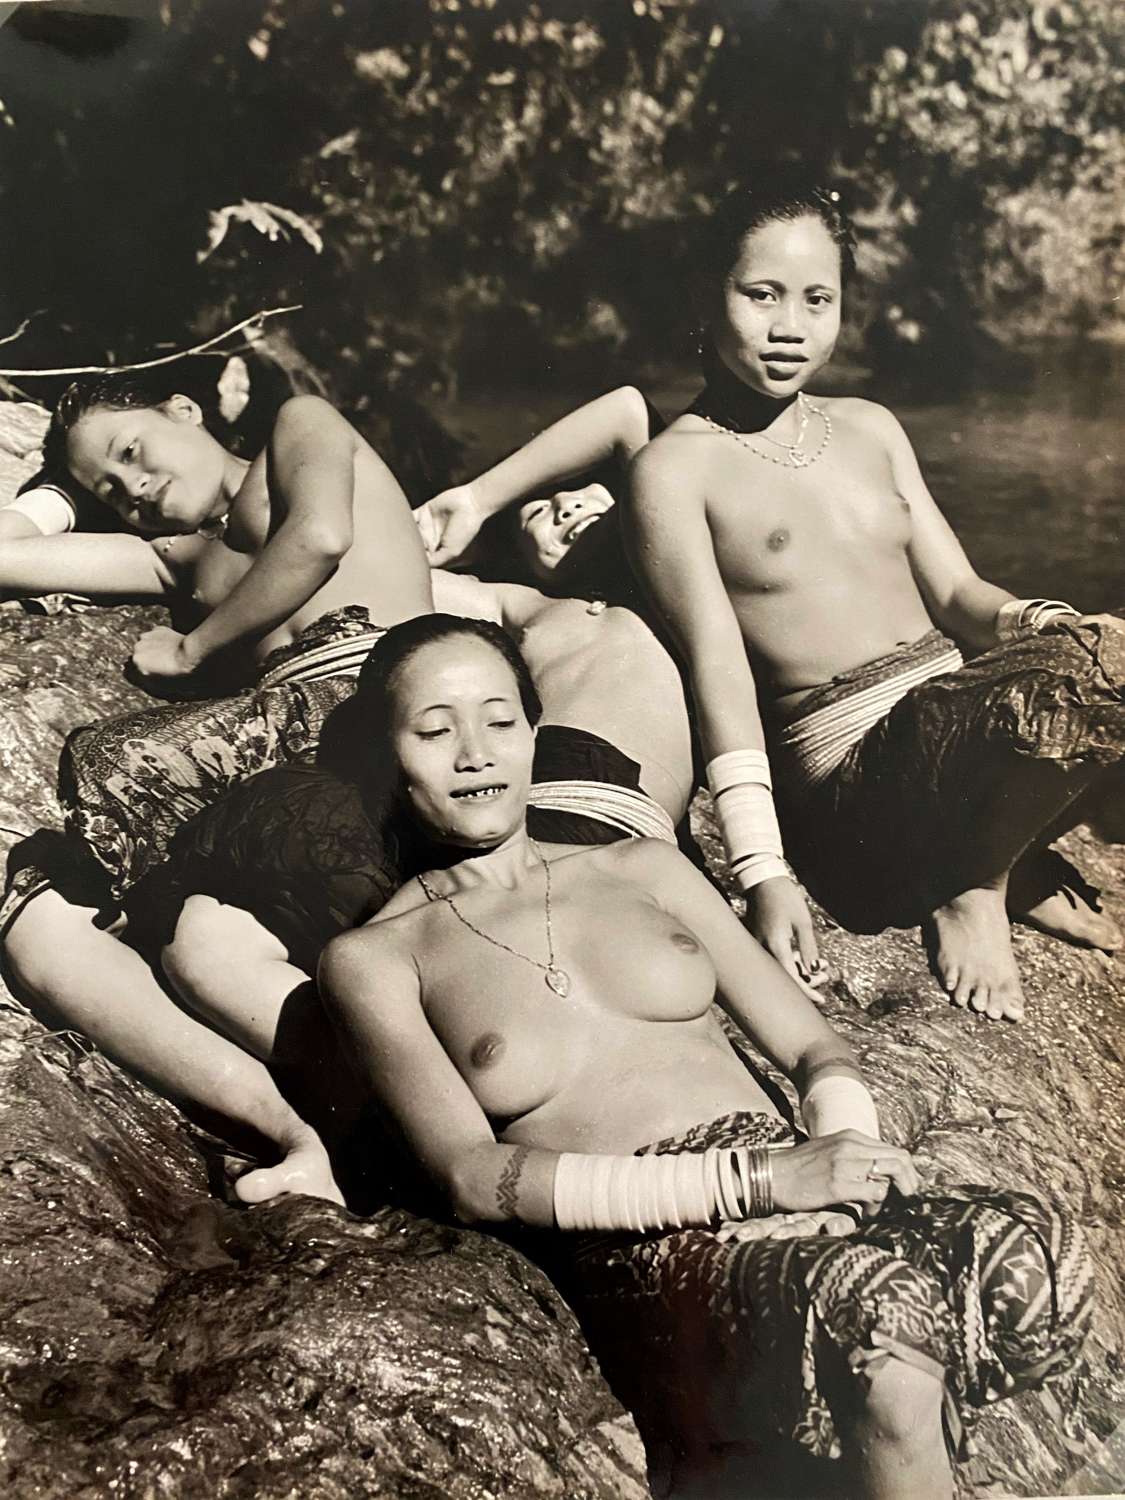  Native Girls Borneo Indonesia C1950-60